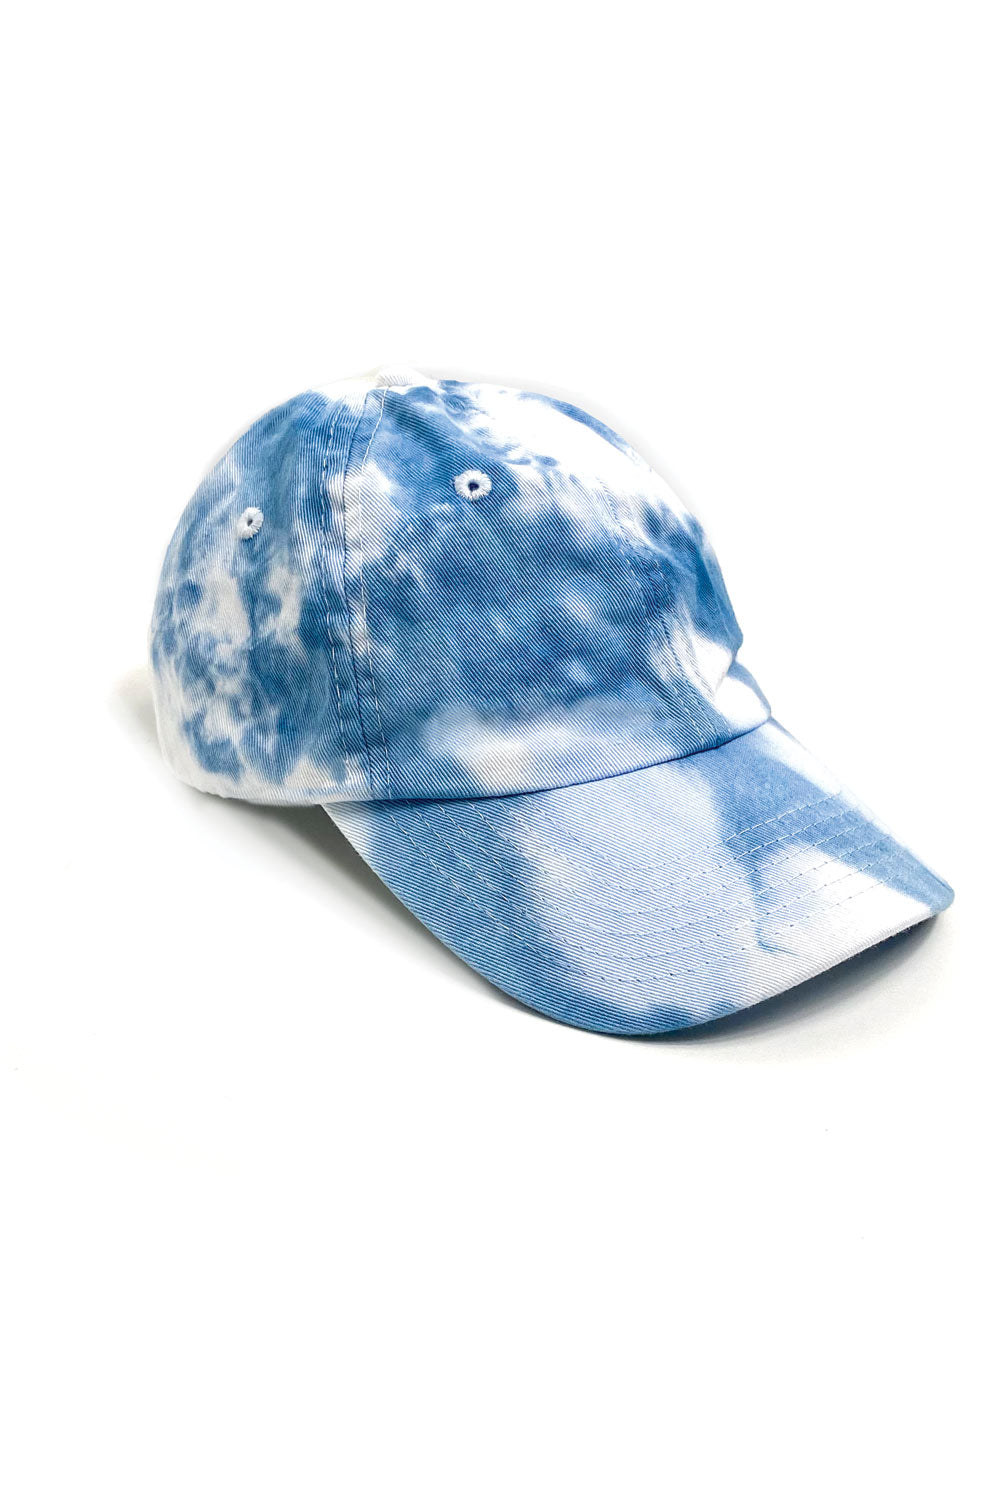 Blue Tie-Dye Baseball cap